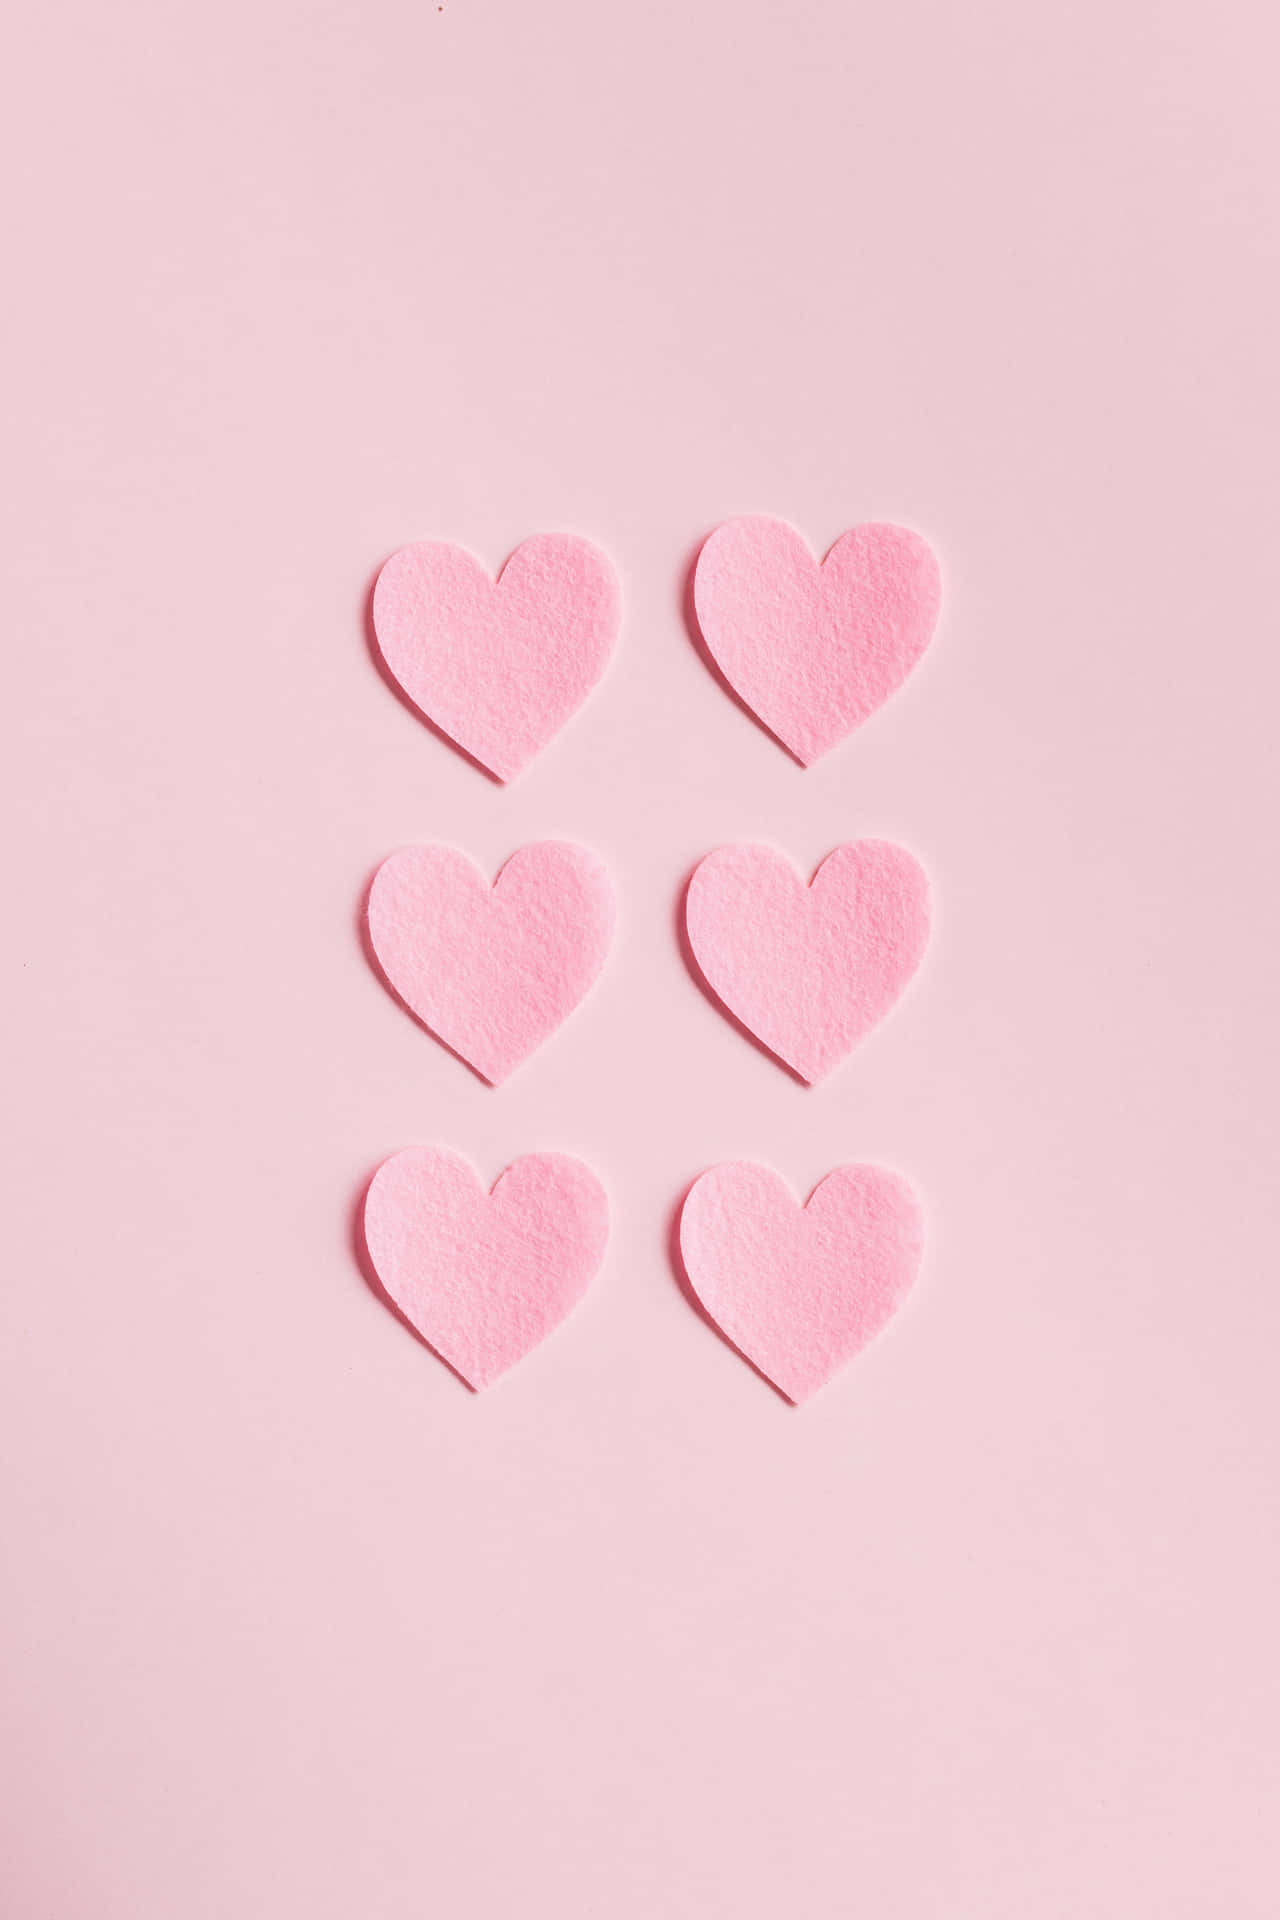 Pink Heart Shape On Pink Background Wallpaper